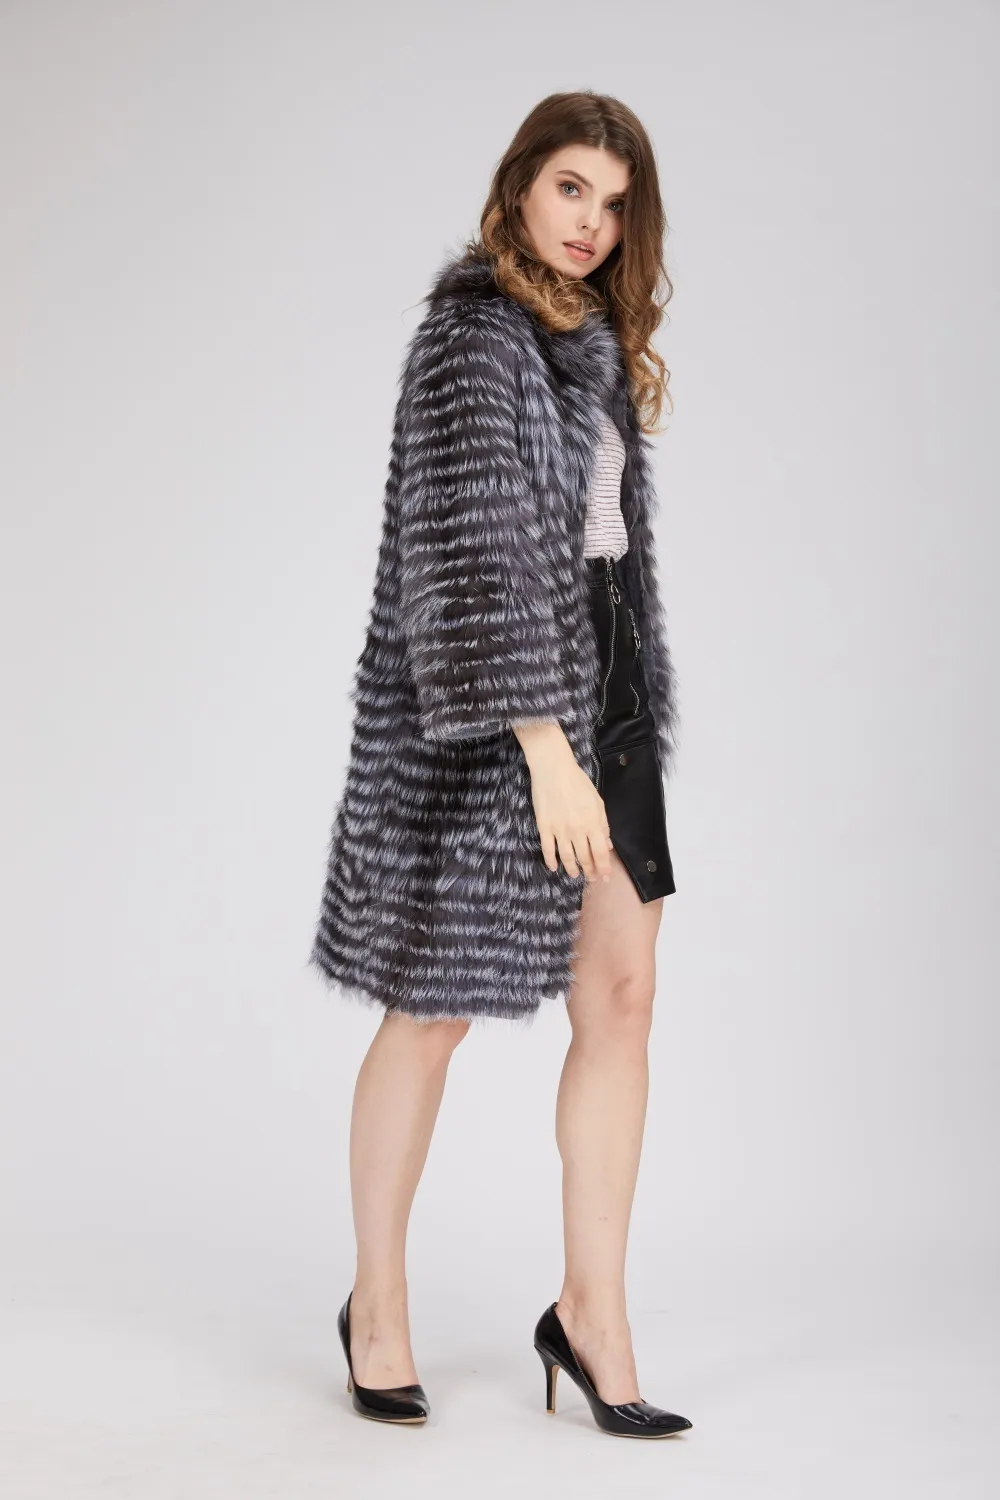 silver fox fur coat with wool lining eileenhou 1809165 (8)